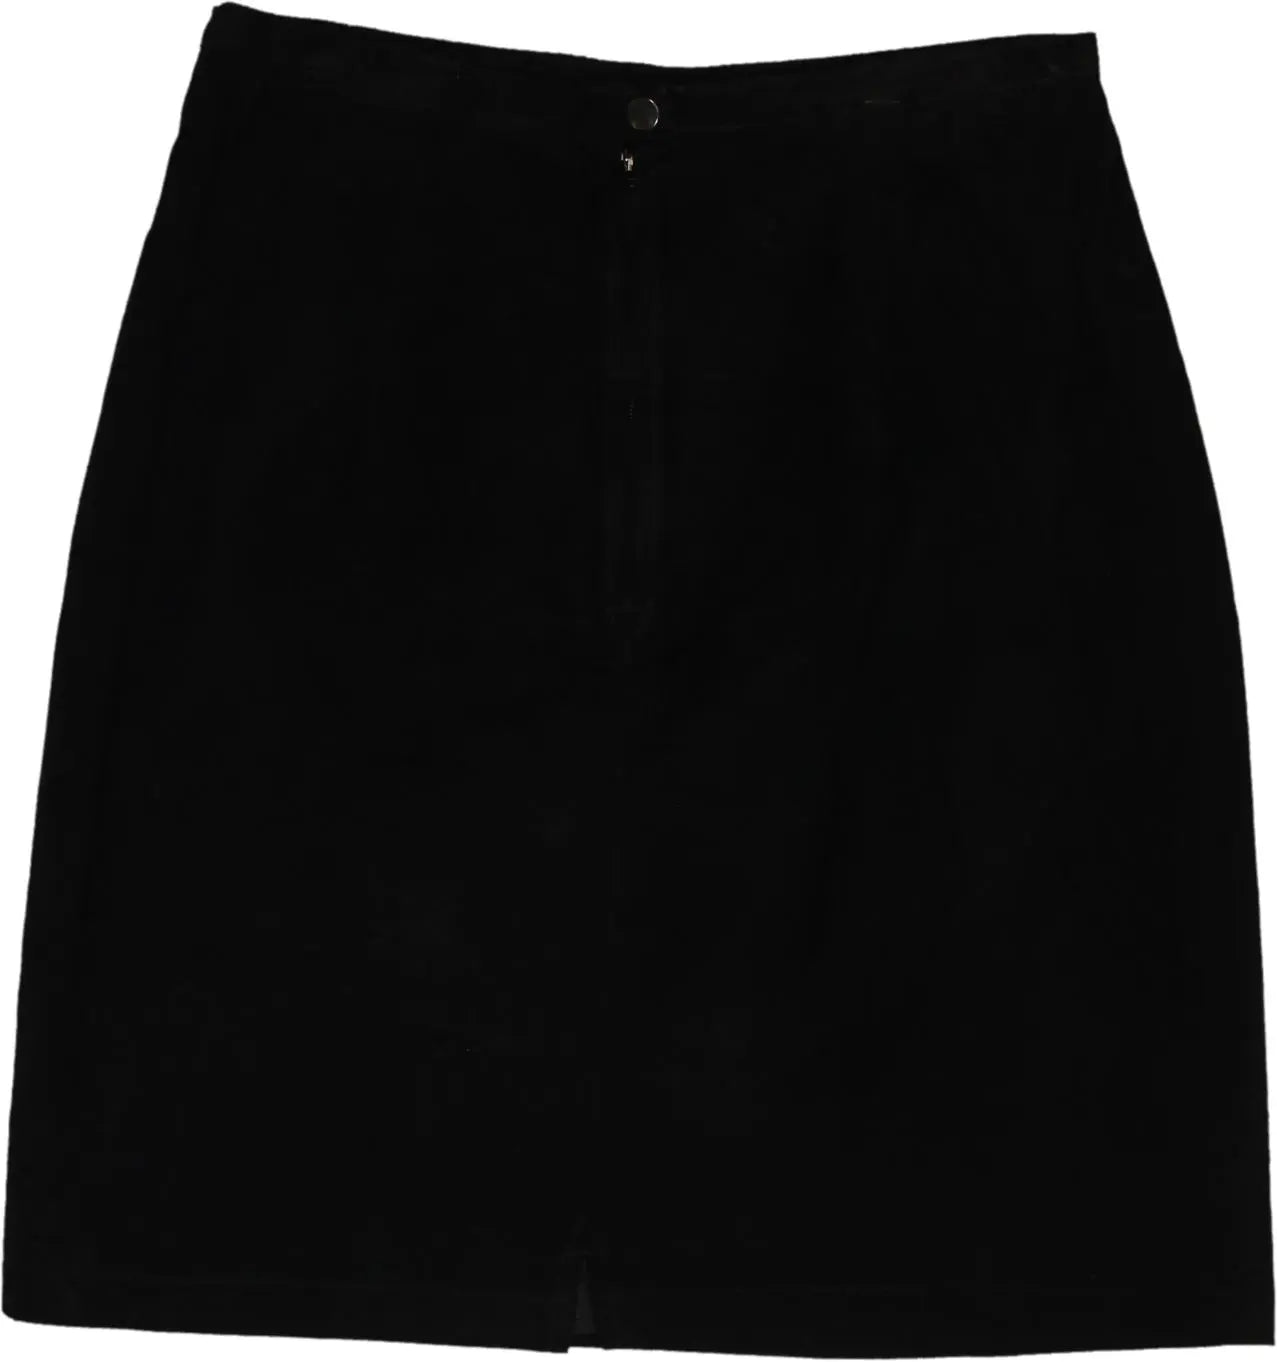 Ann Taylor - Black suède skirt- ThriftTale.com - Vintage and second handclothing